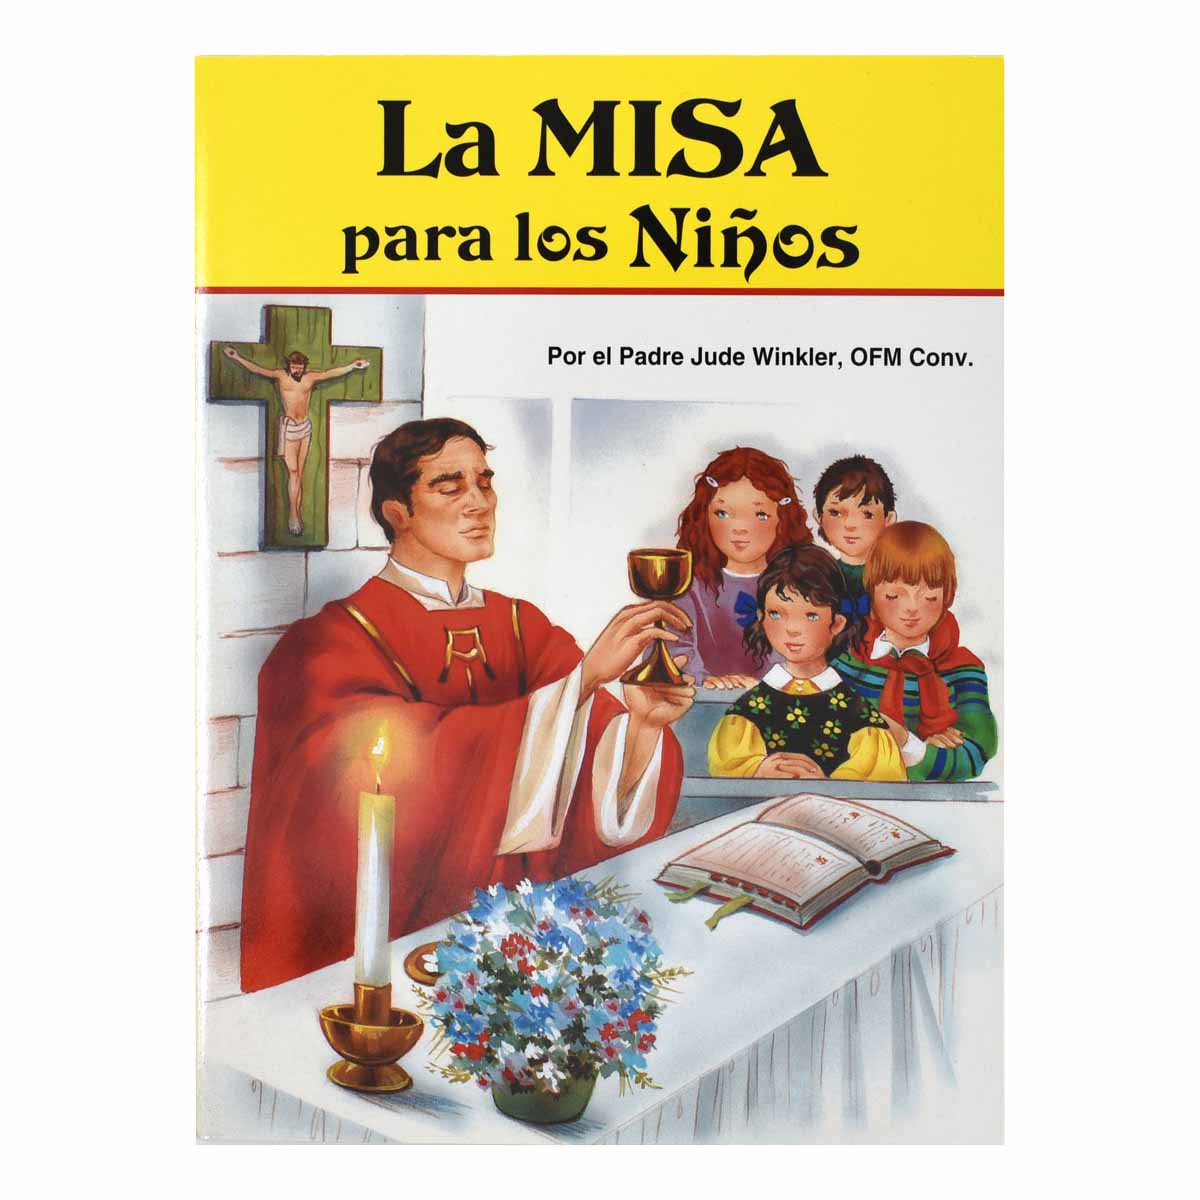 La Misa para los Ninos by Rev. Jude Winkler, OFM Conv.